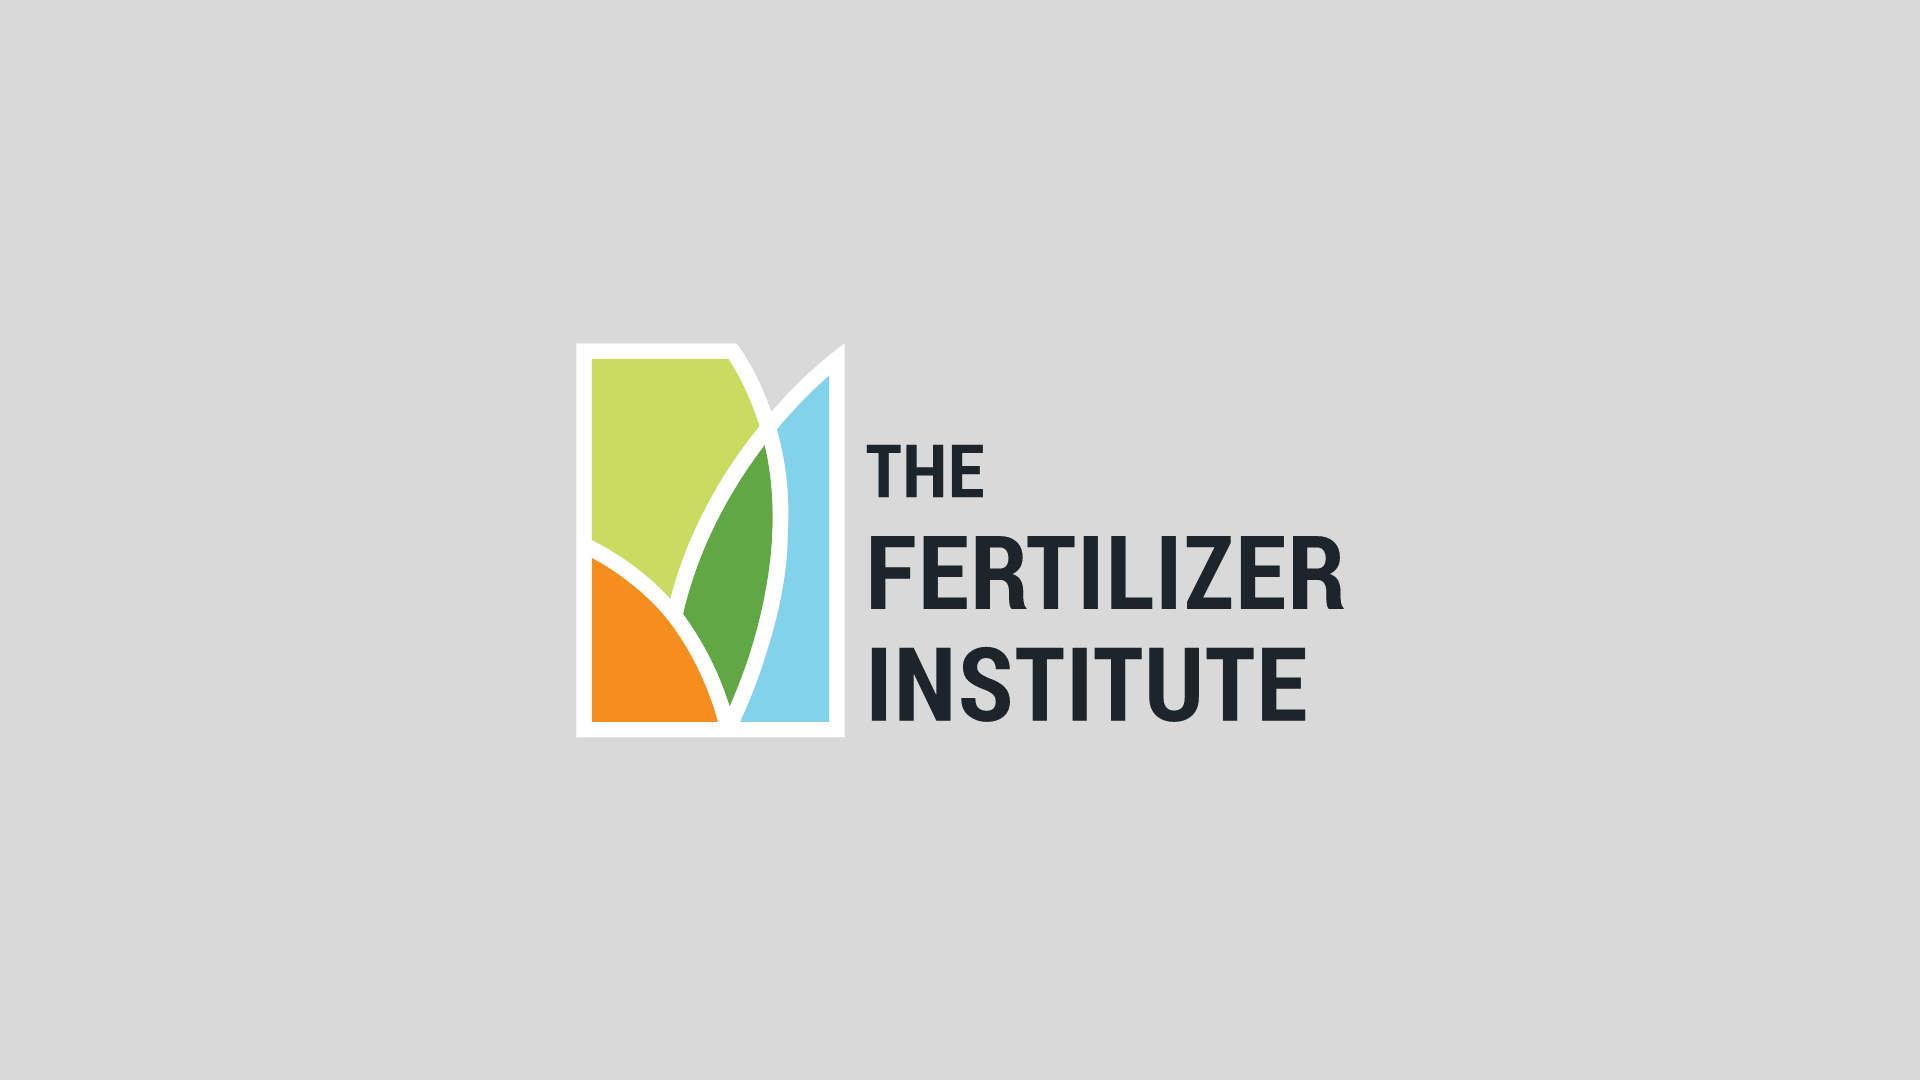 Soil Fertility Manual Chapter Quiz Guides